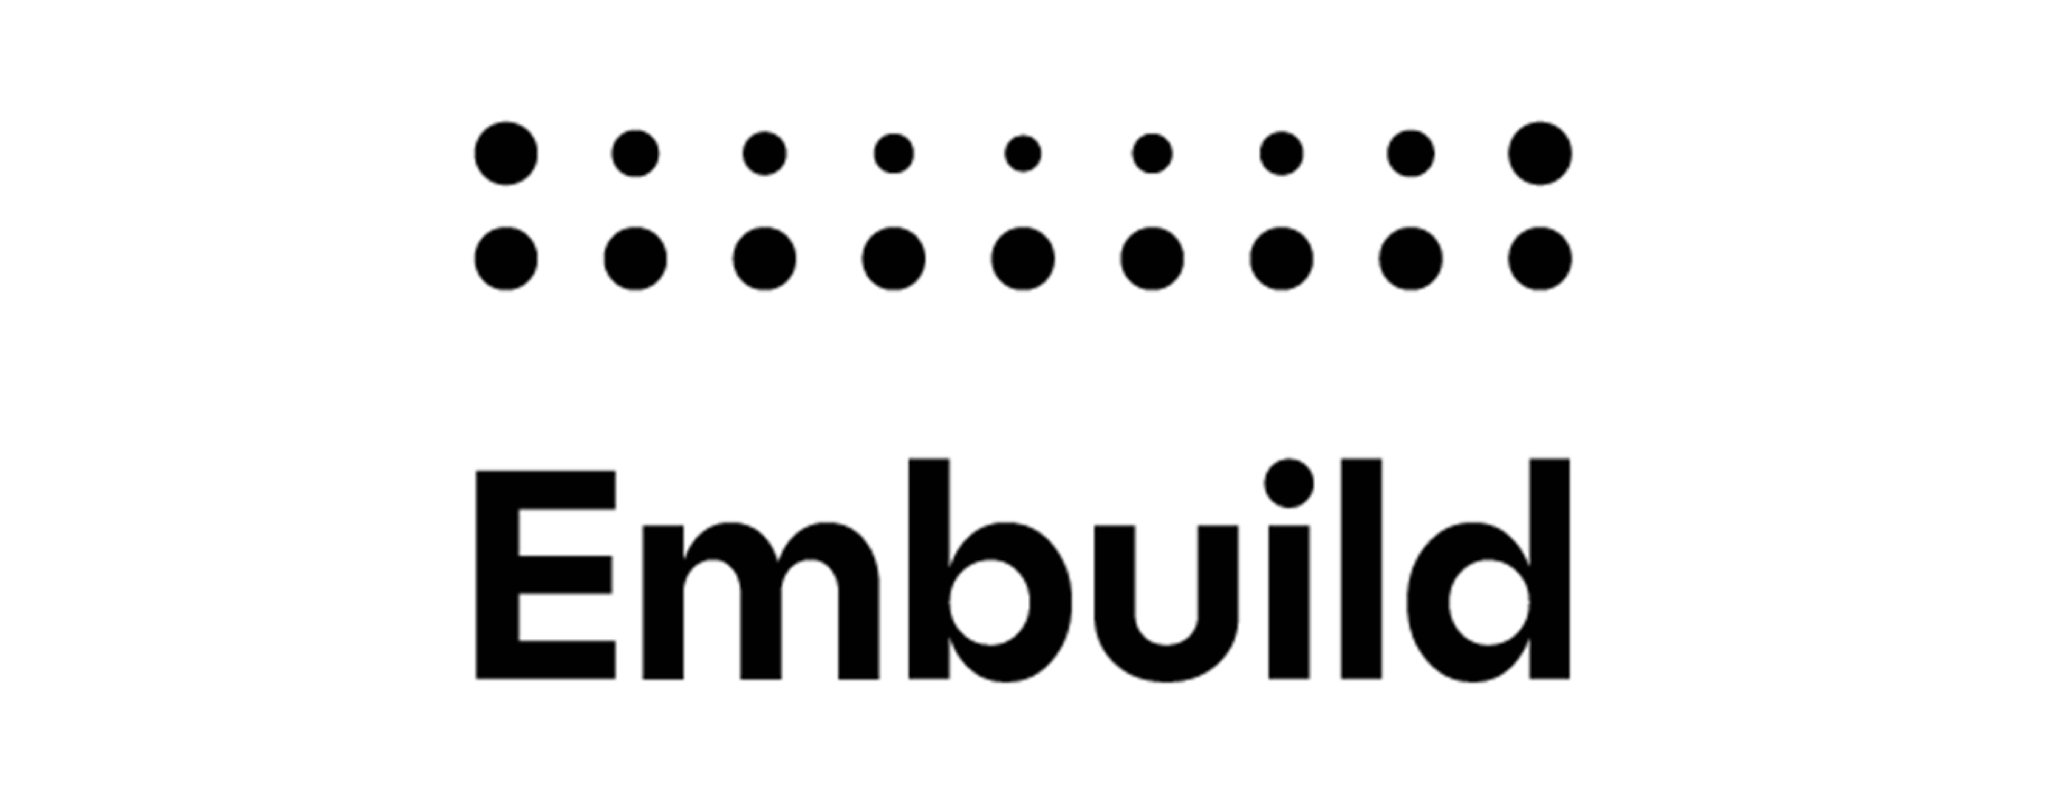 embuild-3-02-2048x805